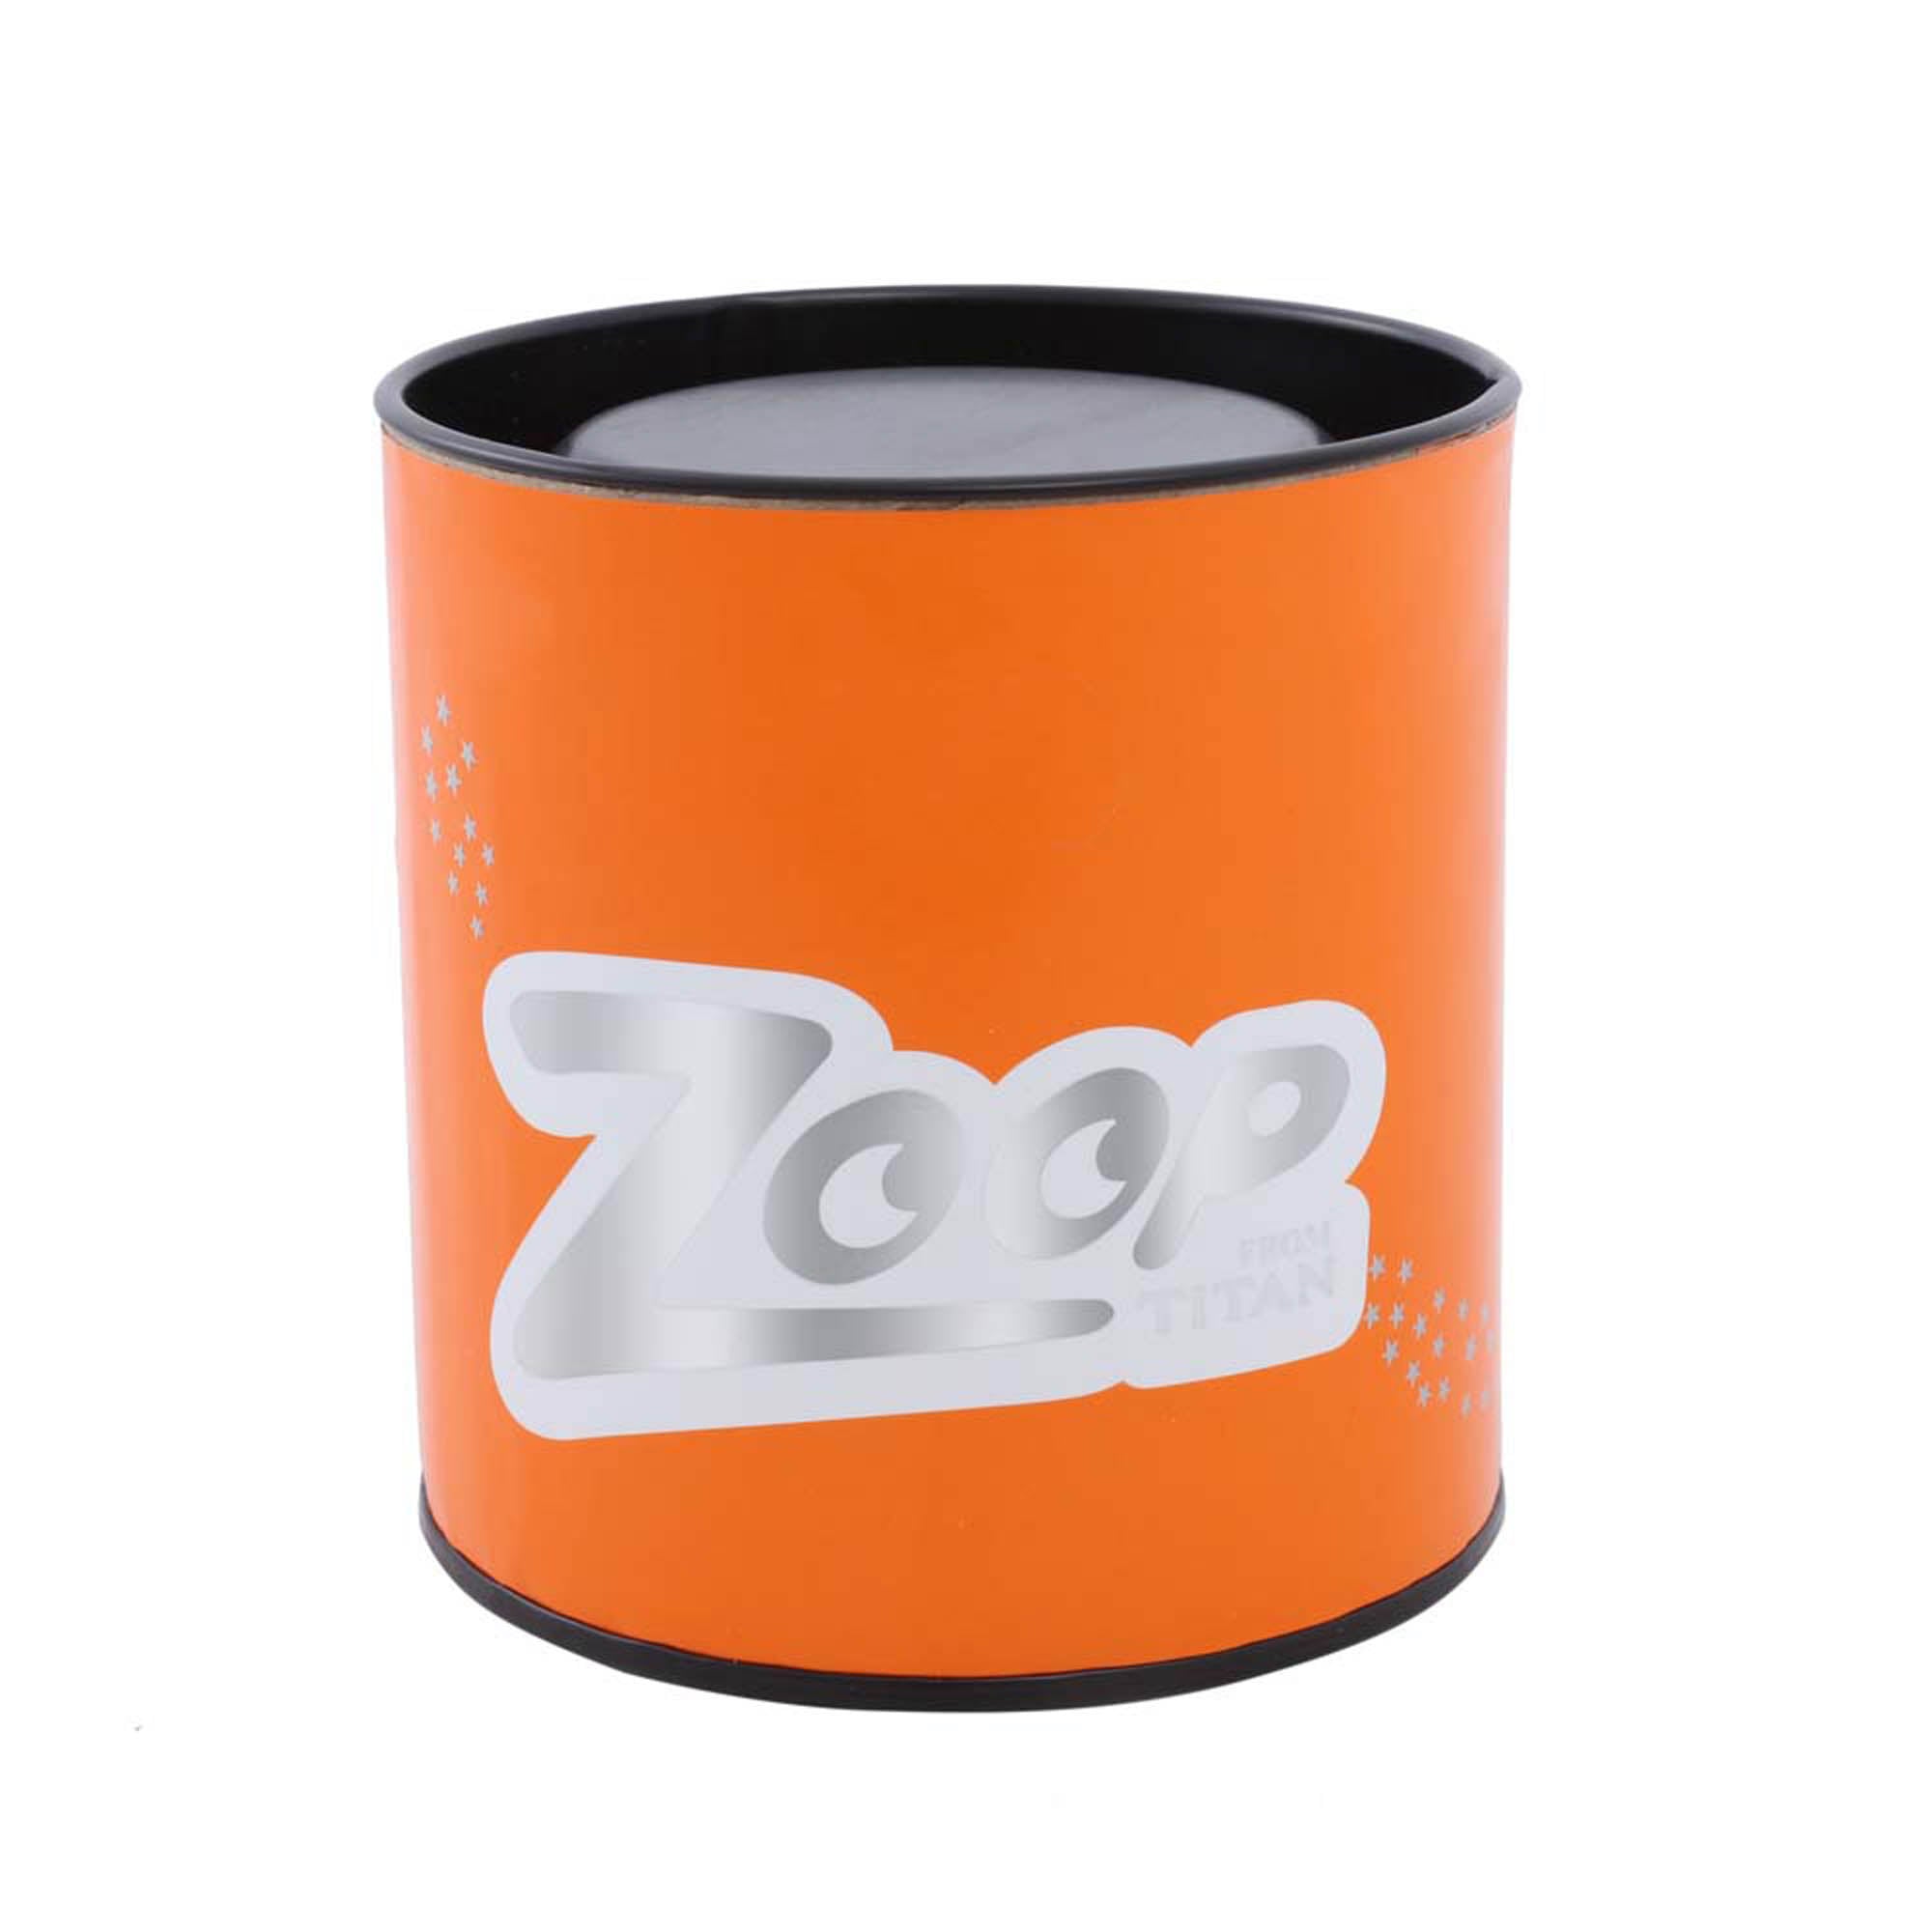 Zoop By Titan Quartz Analog Silver Dial PU Strap Watch for Kids